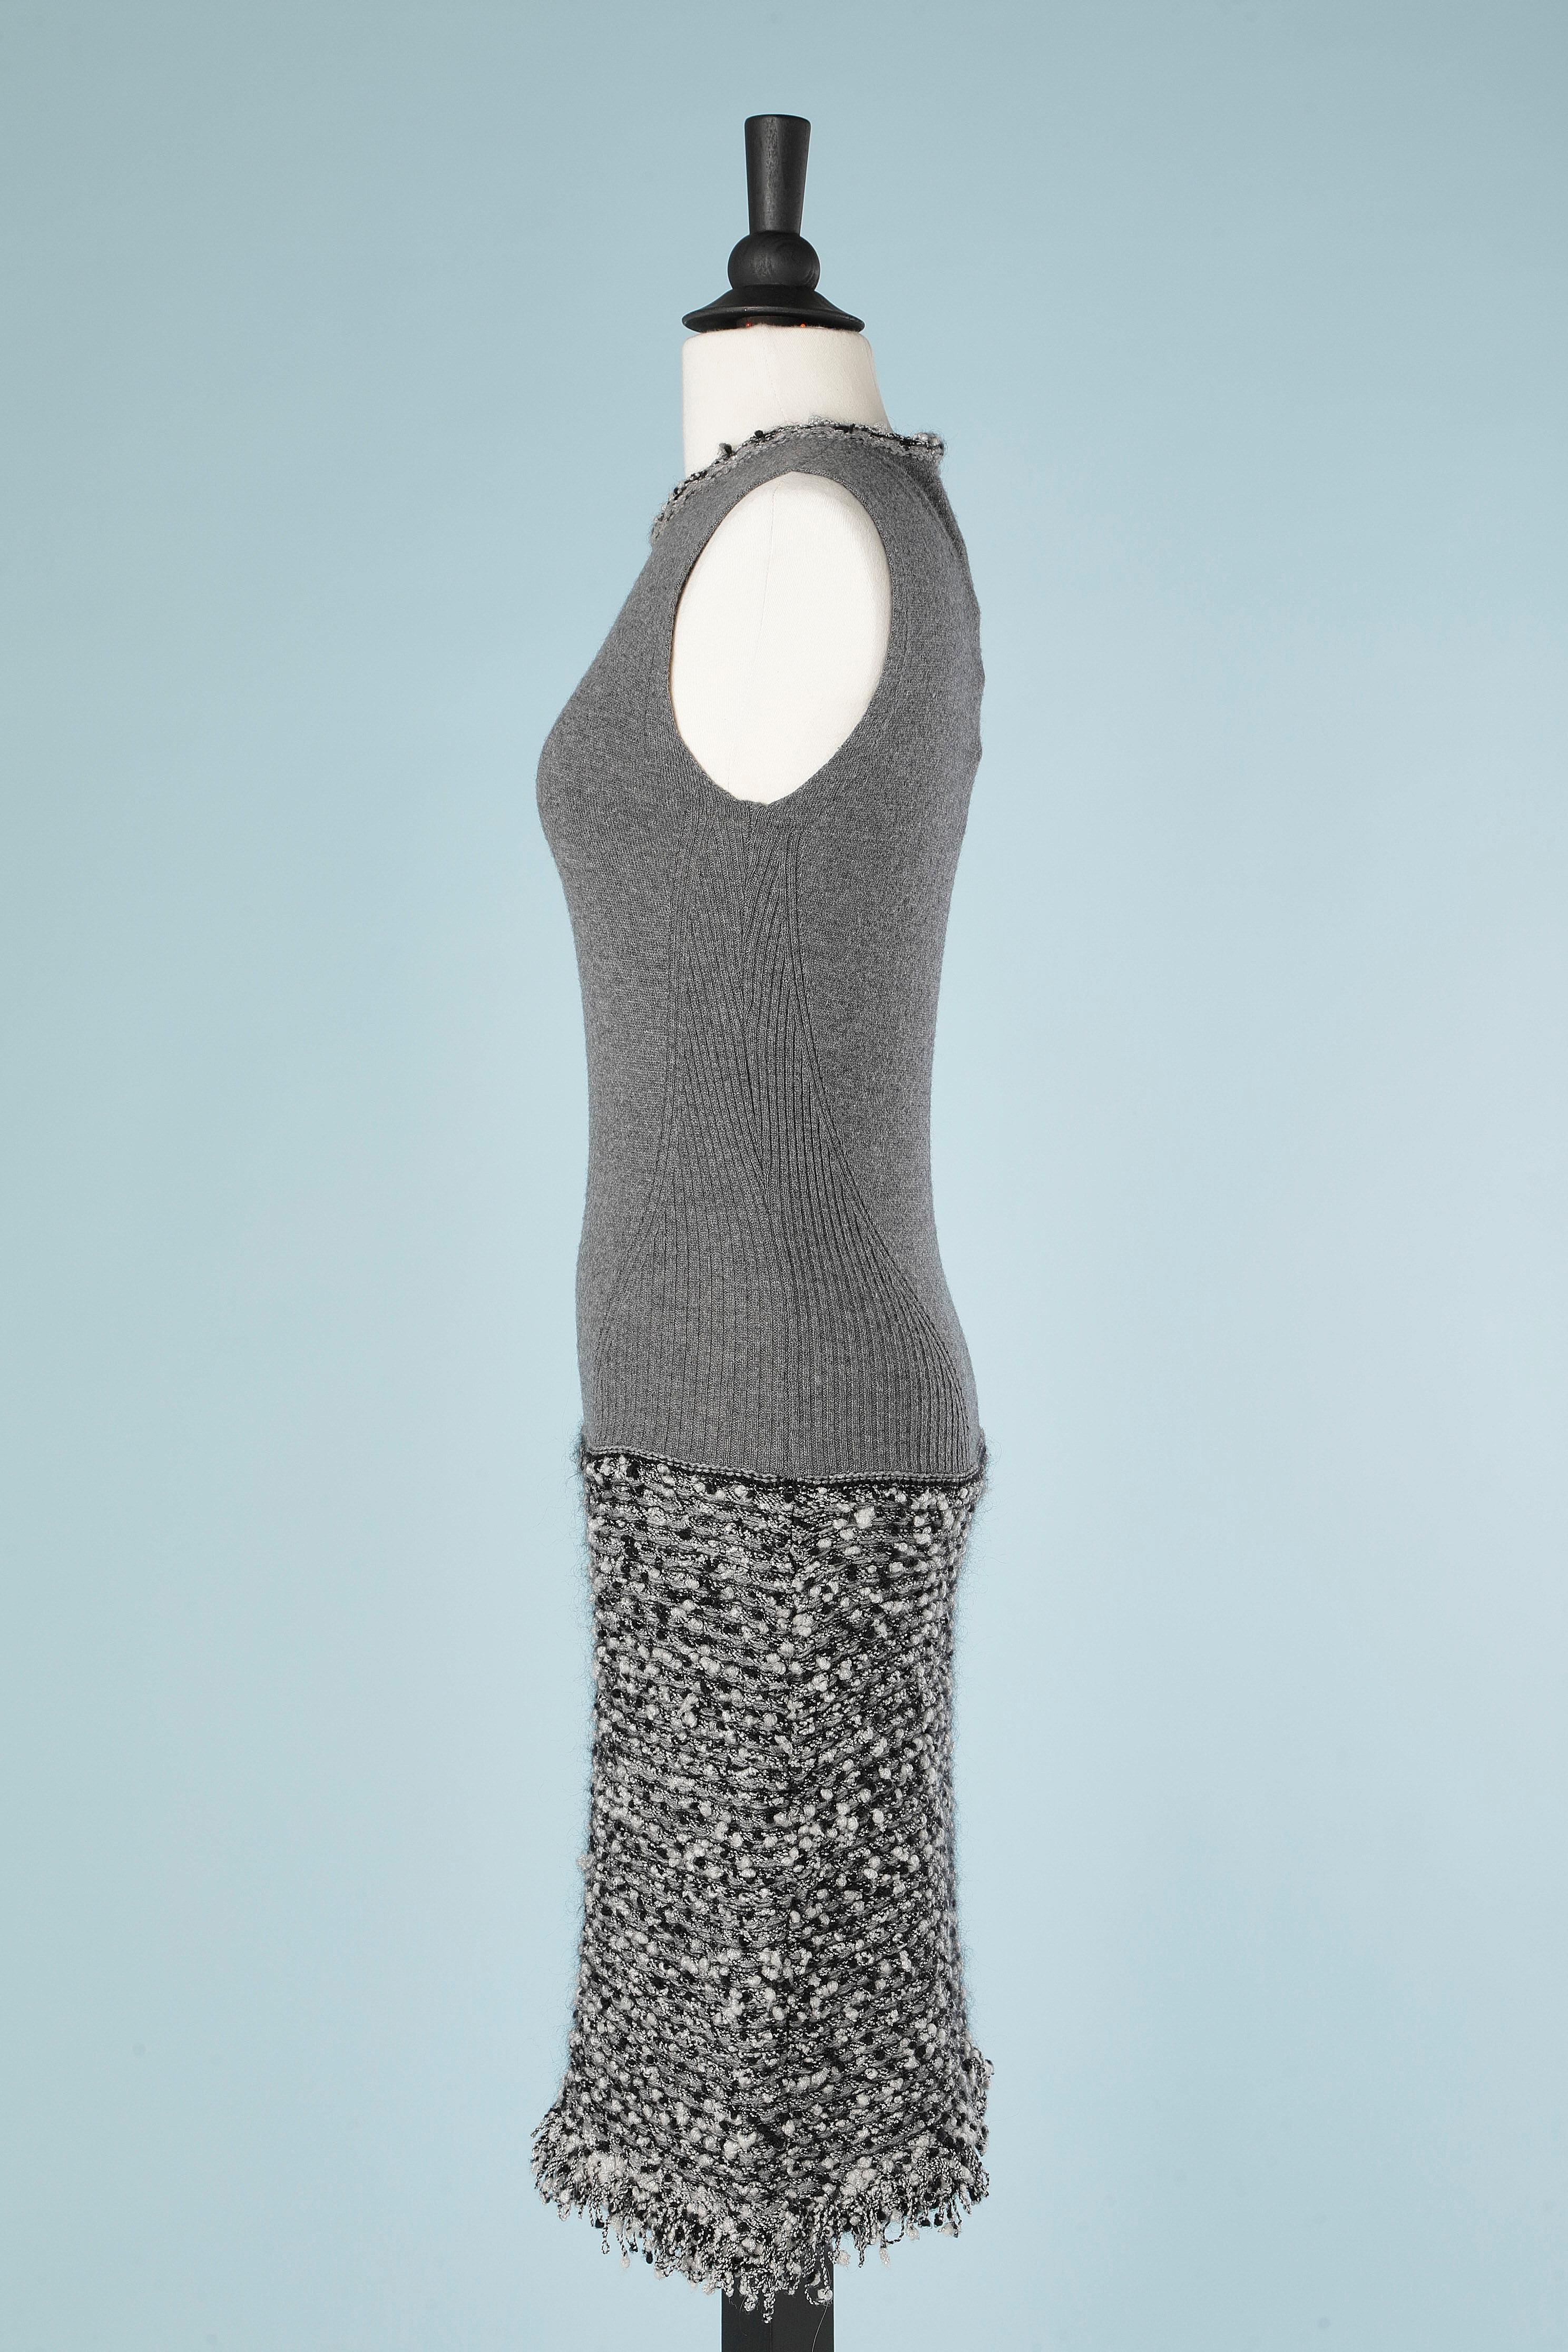 Sleeveless grey knit dress with lurex knit bottom  In Excellent Condition For Sale In Saint-Ouen-Sur-Seine, FR